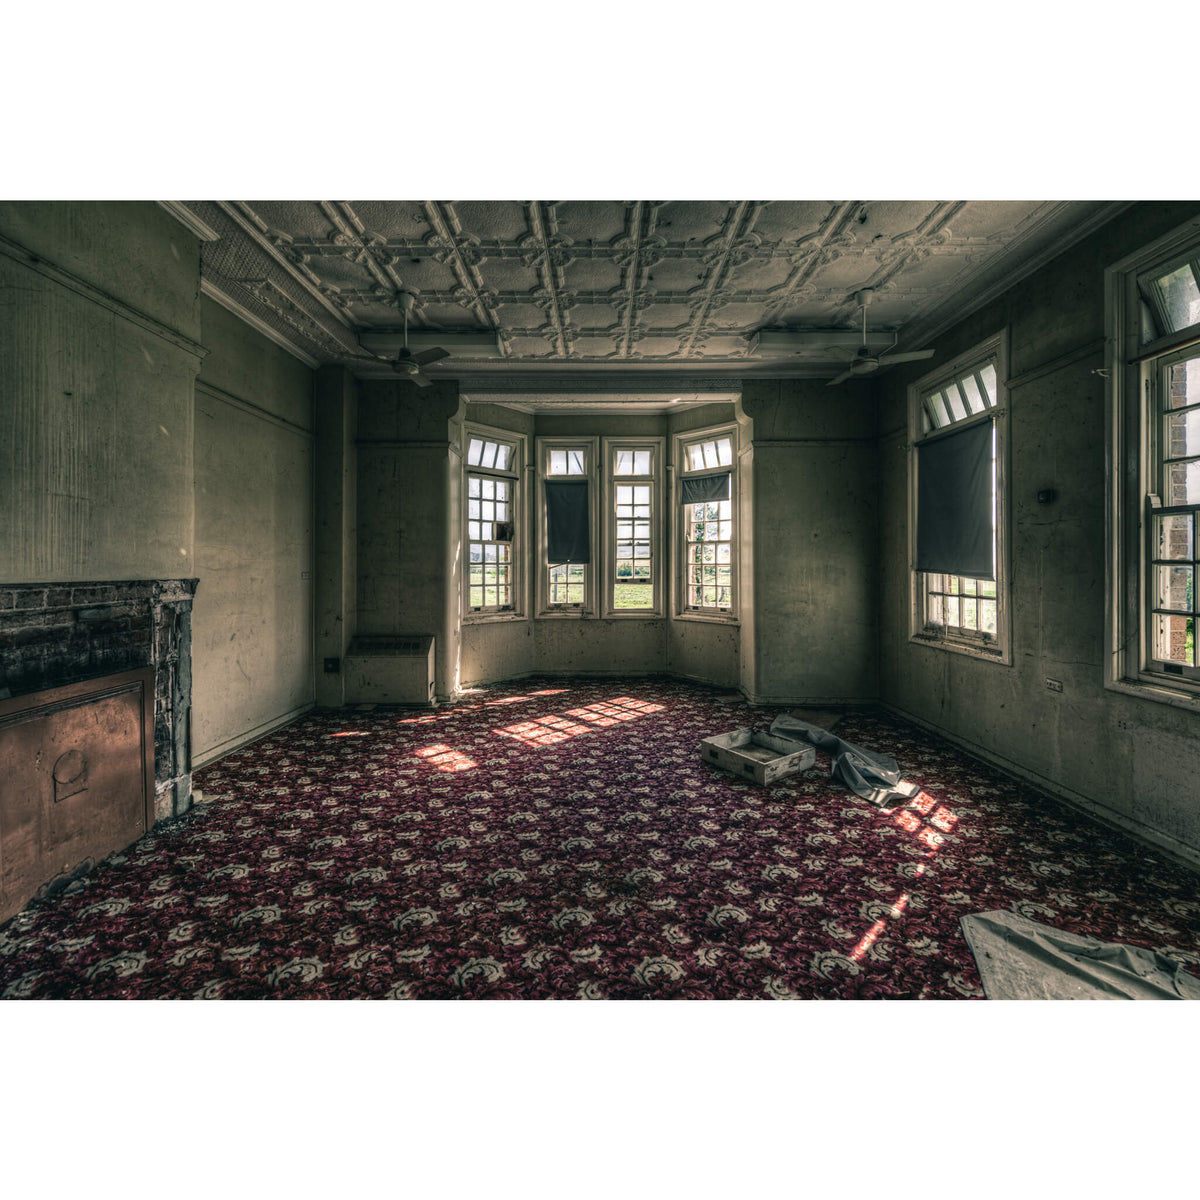 The Grand Room | The Asylum